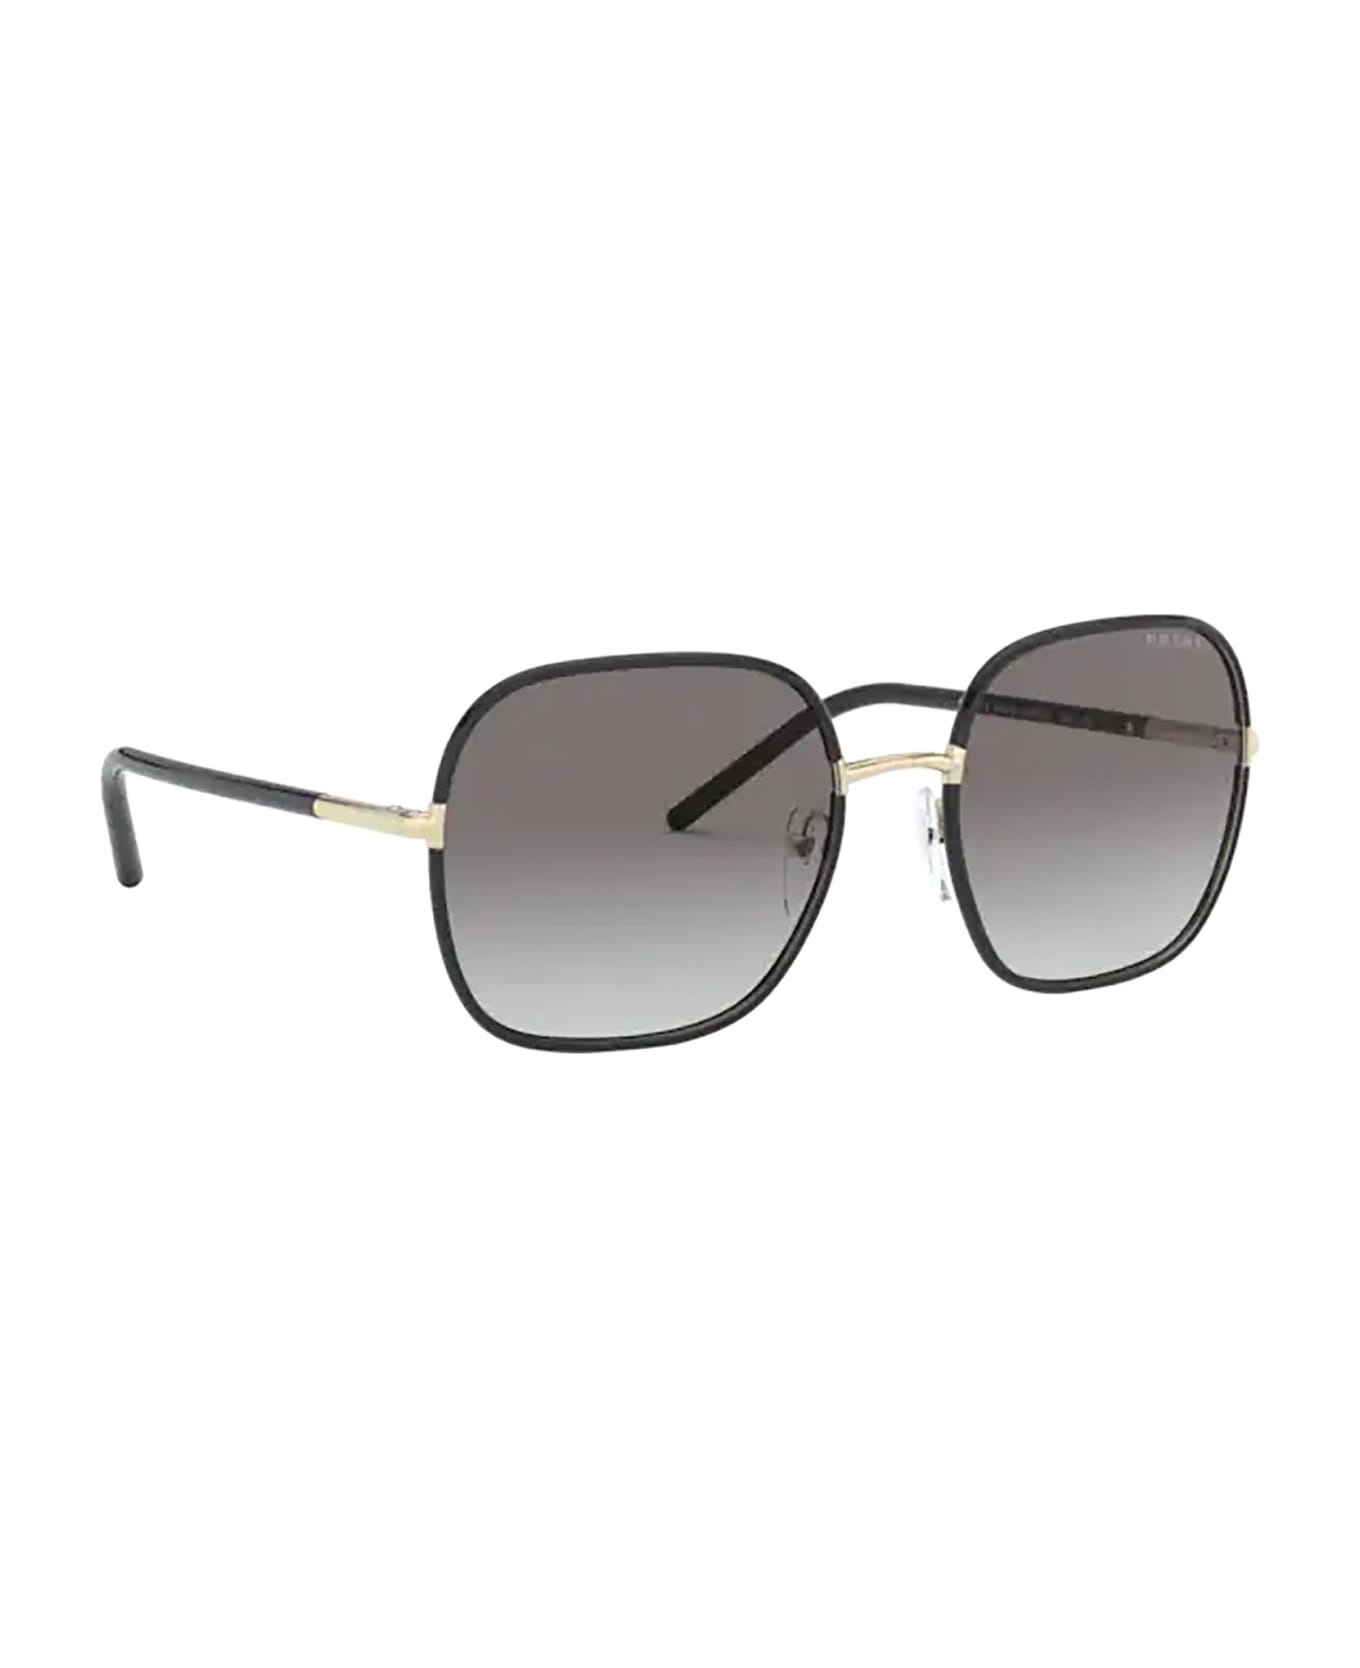 Prada Eyewear Pr 67xs Pale Gold / Black Sunglasses - Pale Gold / Black